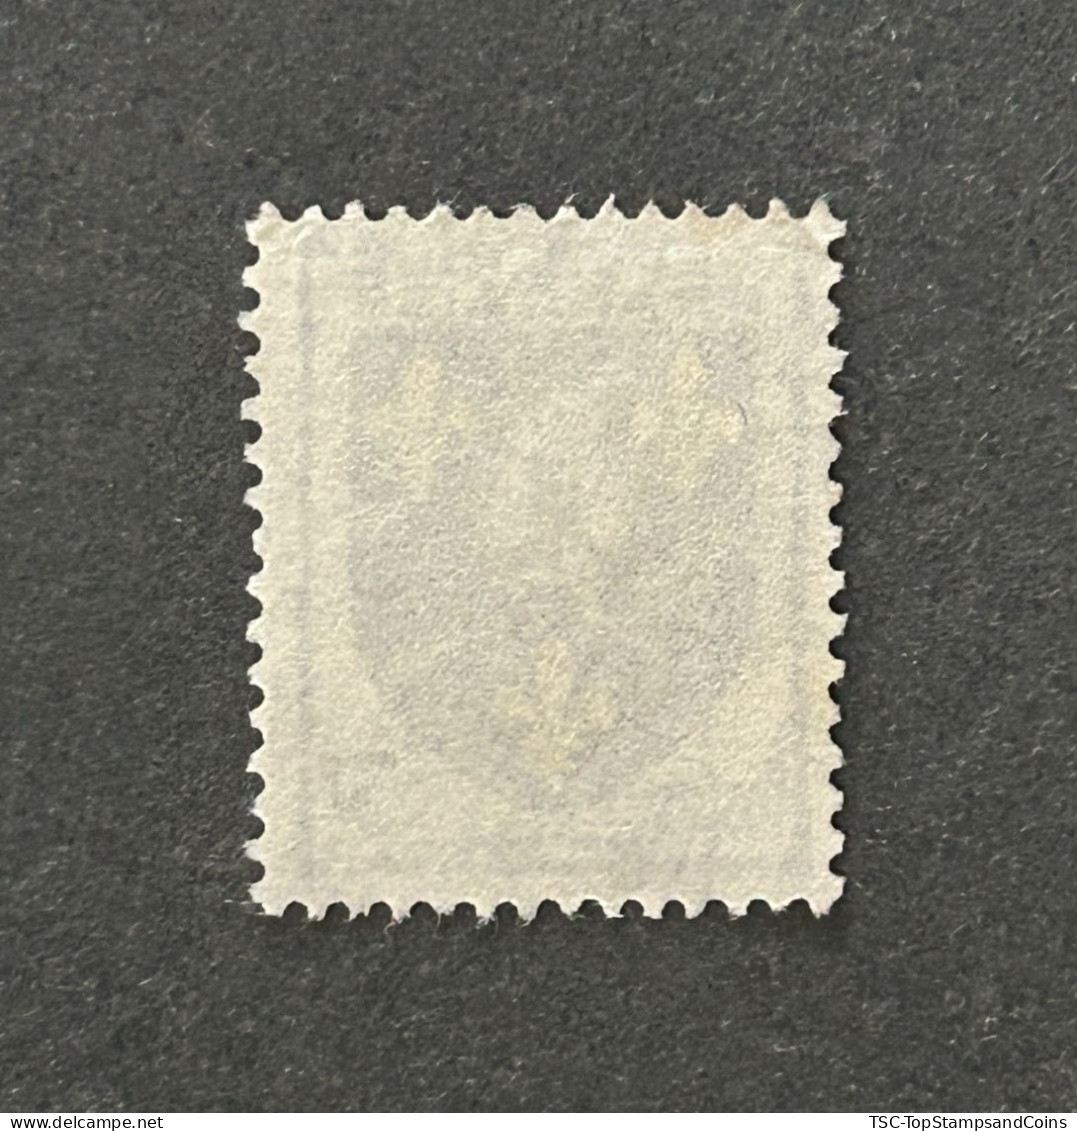 FRA1005U7 - Armoiries De Provinces (VII) - Saintonge - 5 F Used Stamp - 1954 - France YT 1005 - 1941-66 Armoiries Et Blasons